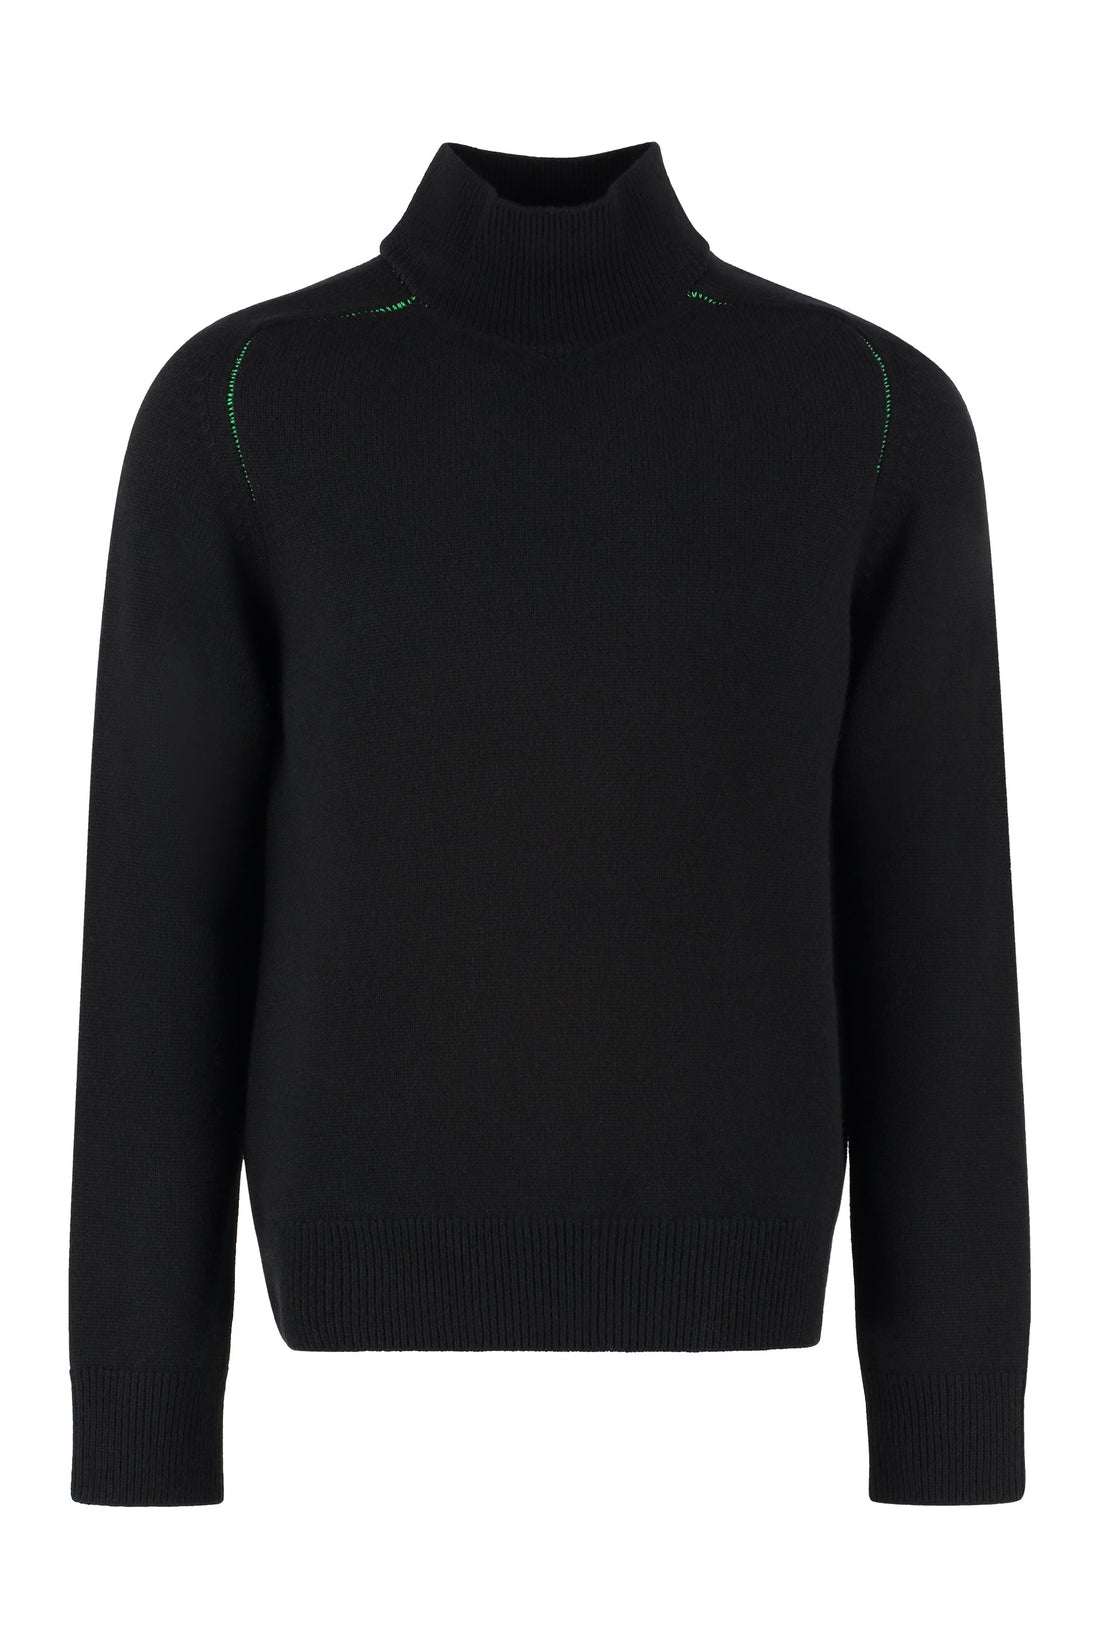 Bottega Veneta-OUTLET-SALE-Wool turtleneck sweater-ARCHIVIST